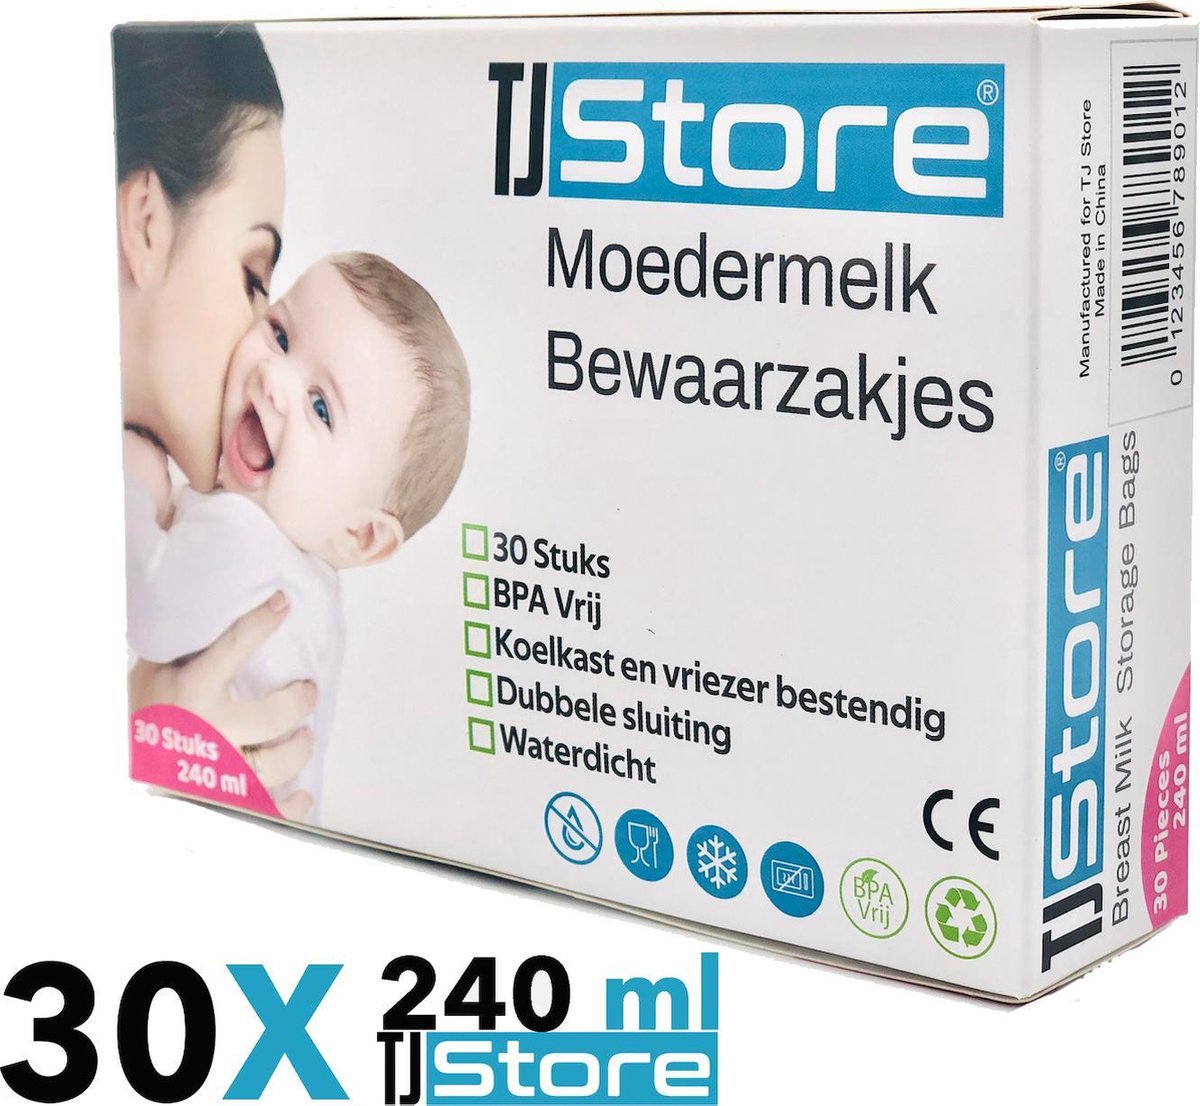 30 stuks 240ml - borstvoeding zakjes - moedermelk zakjes - moedermelk bewaarzakjes - TJ Store